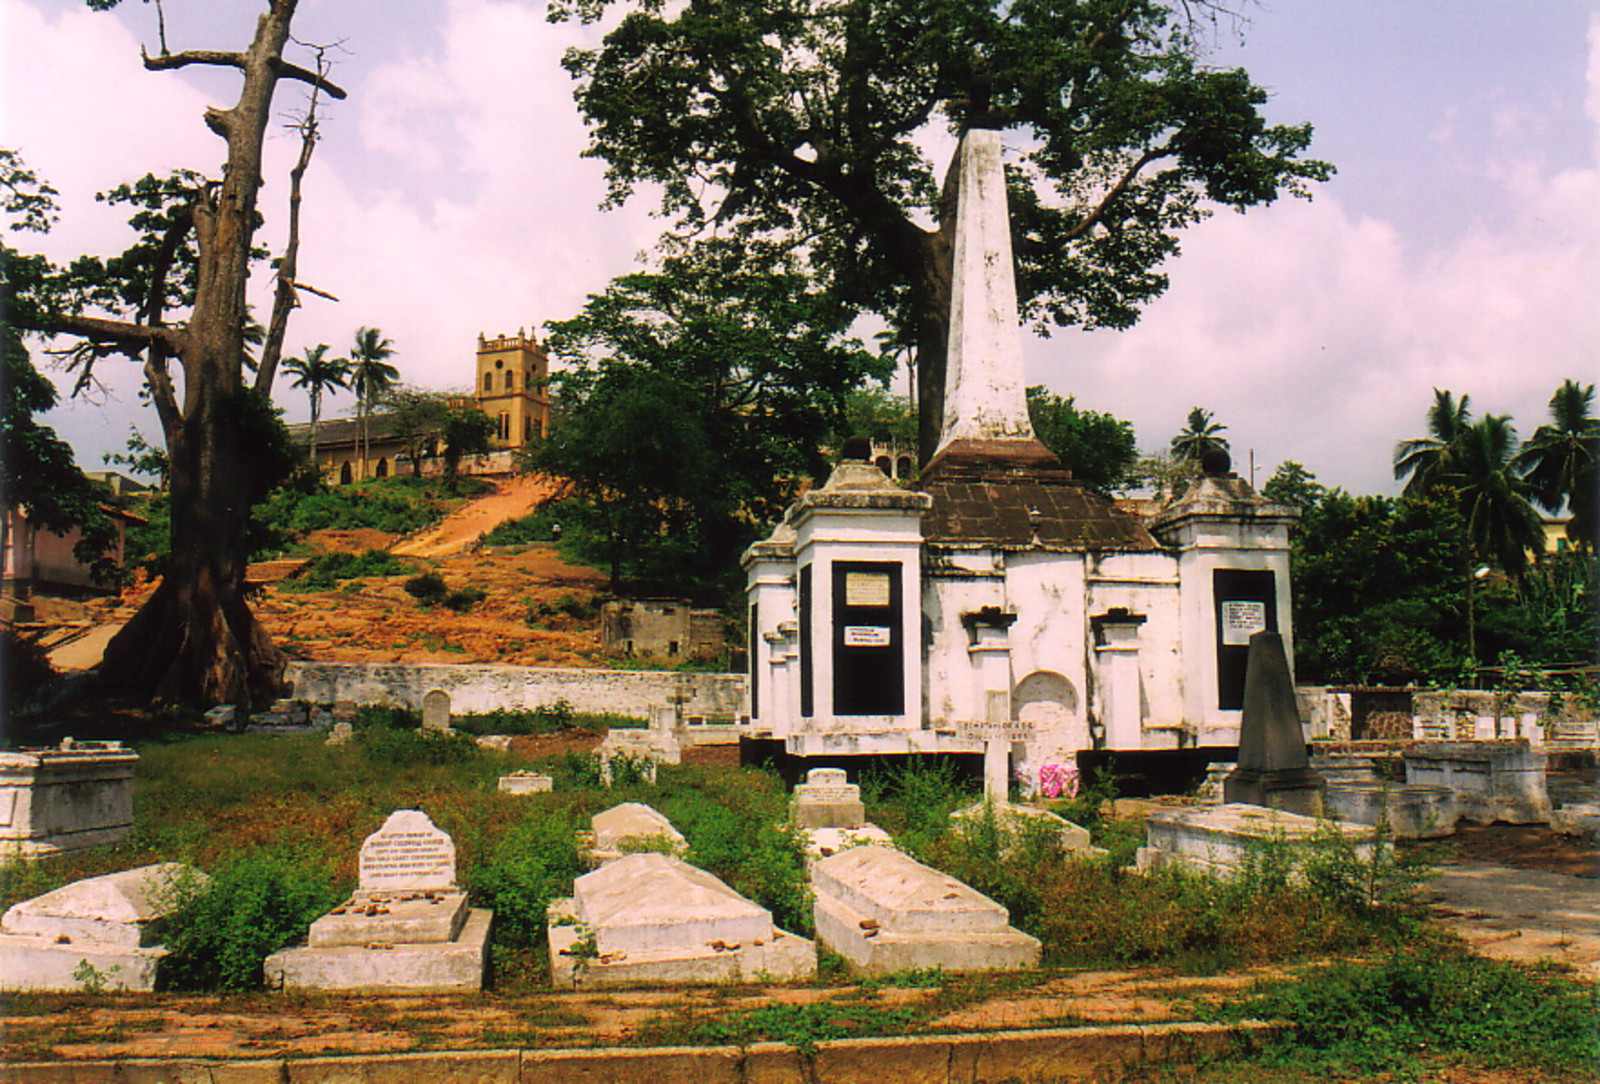 The Dutch cemetery in Elmina